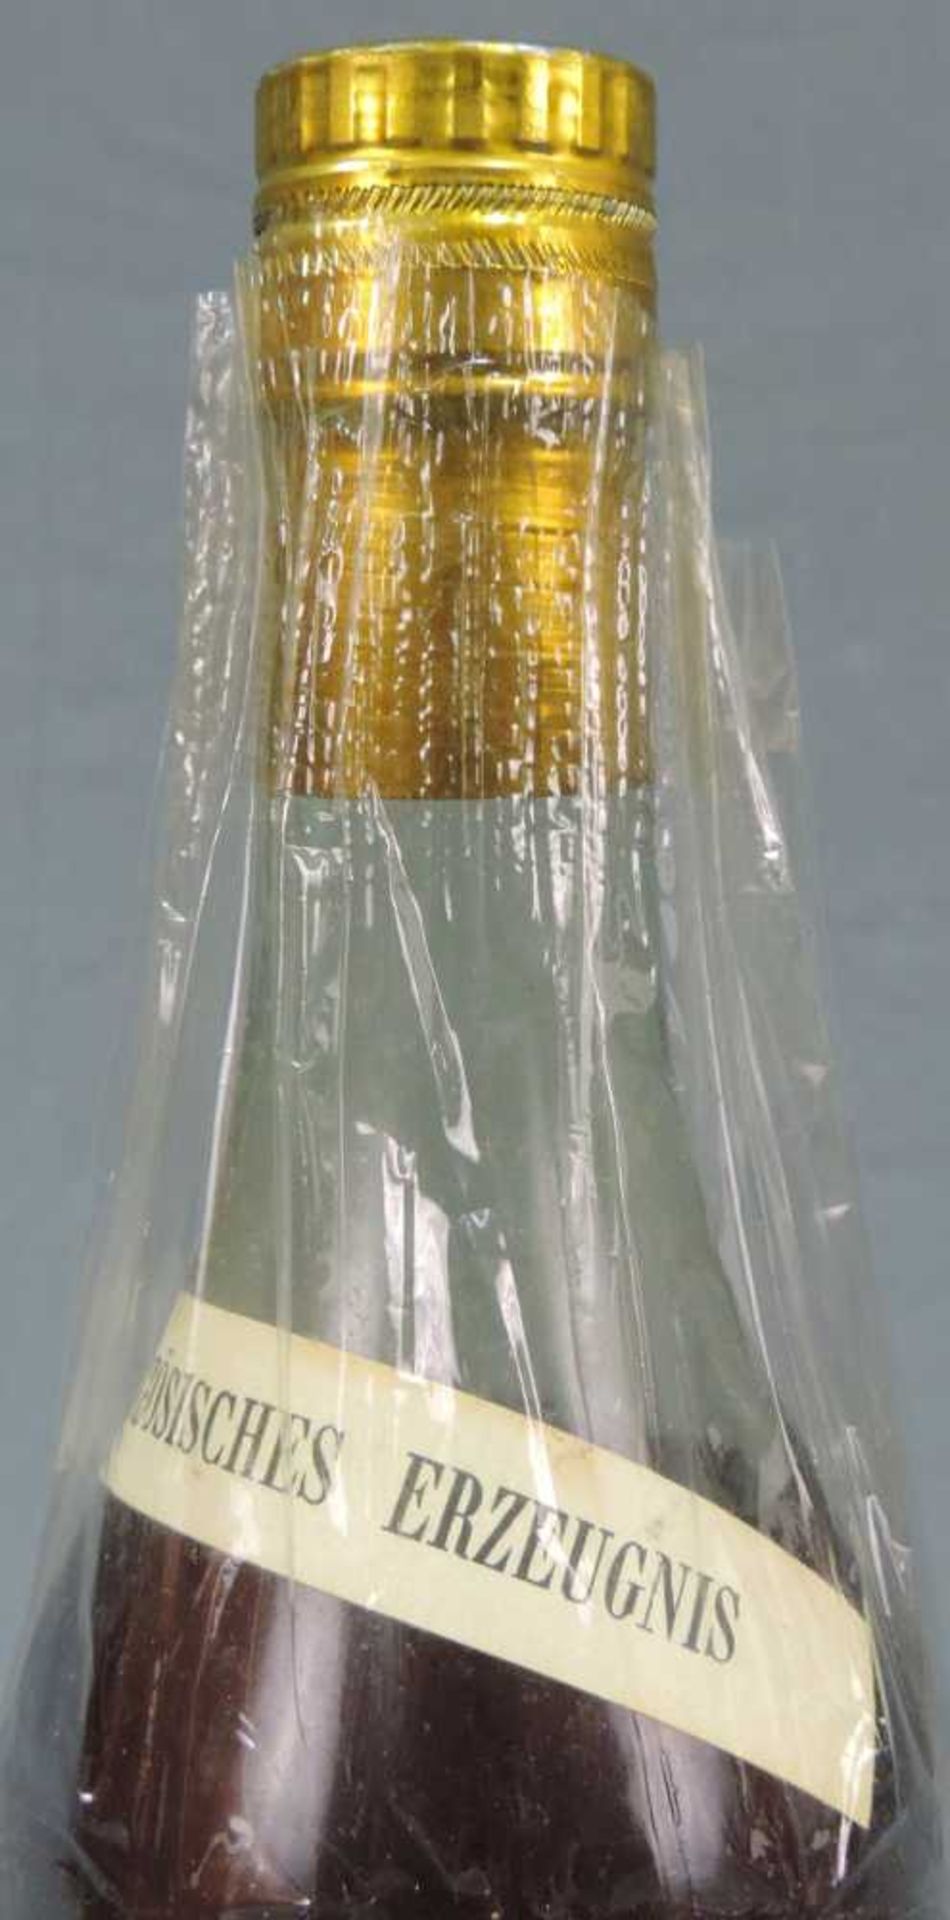 Grande Champagne Marcel Ragnaud. 41% 70cl. Grande Champagne Marcel Ragnaud. 41% 70cl. - Image 4 of 6